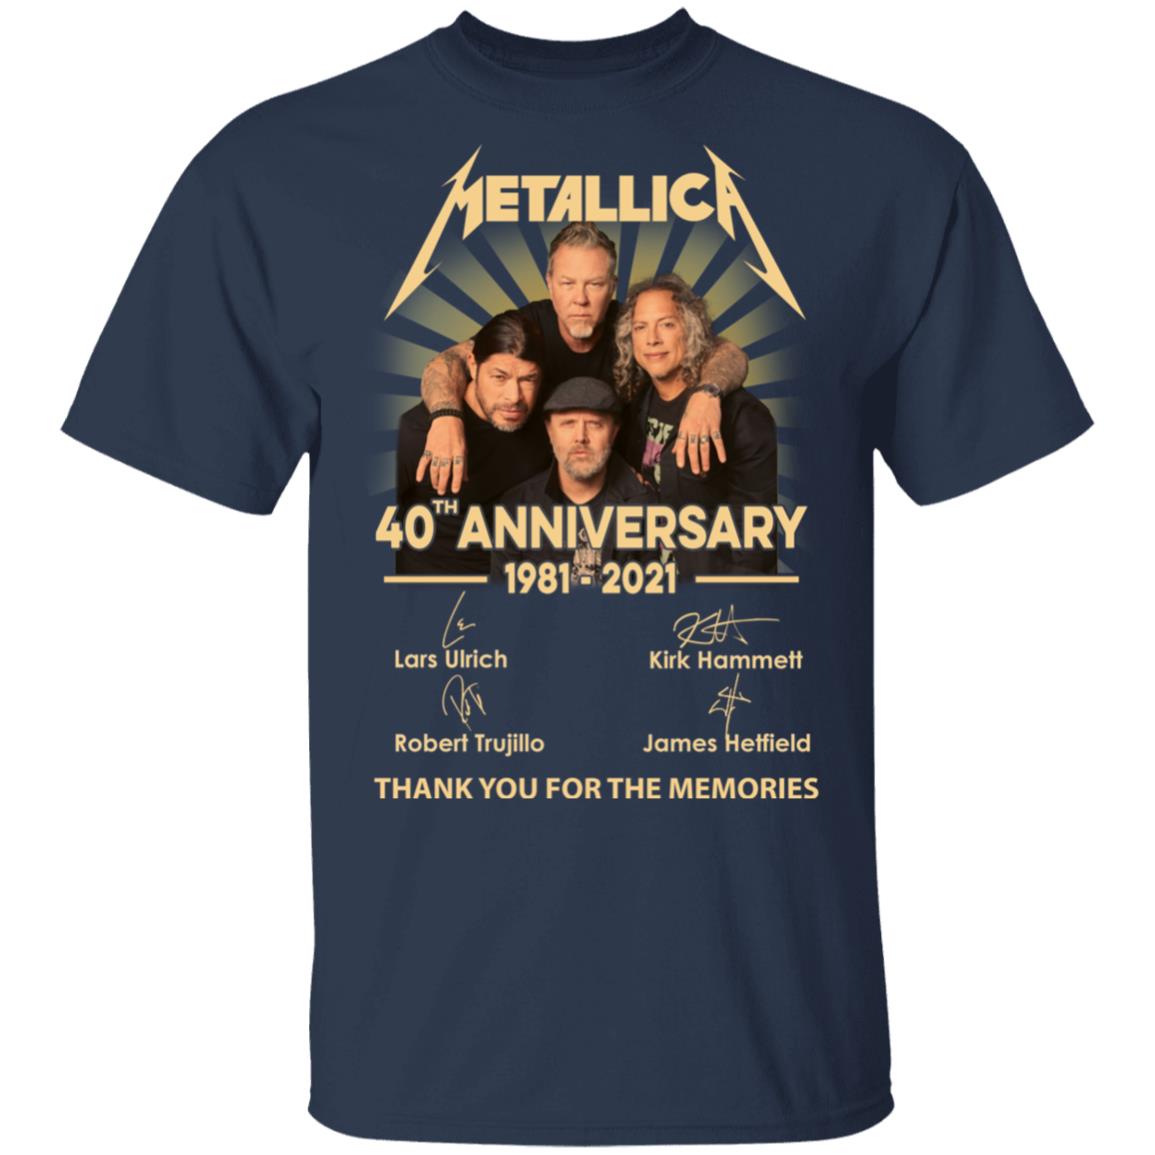 Metallica 40th anniversary 1981-2021 thank you for the memories shirt ...